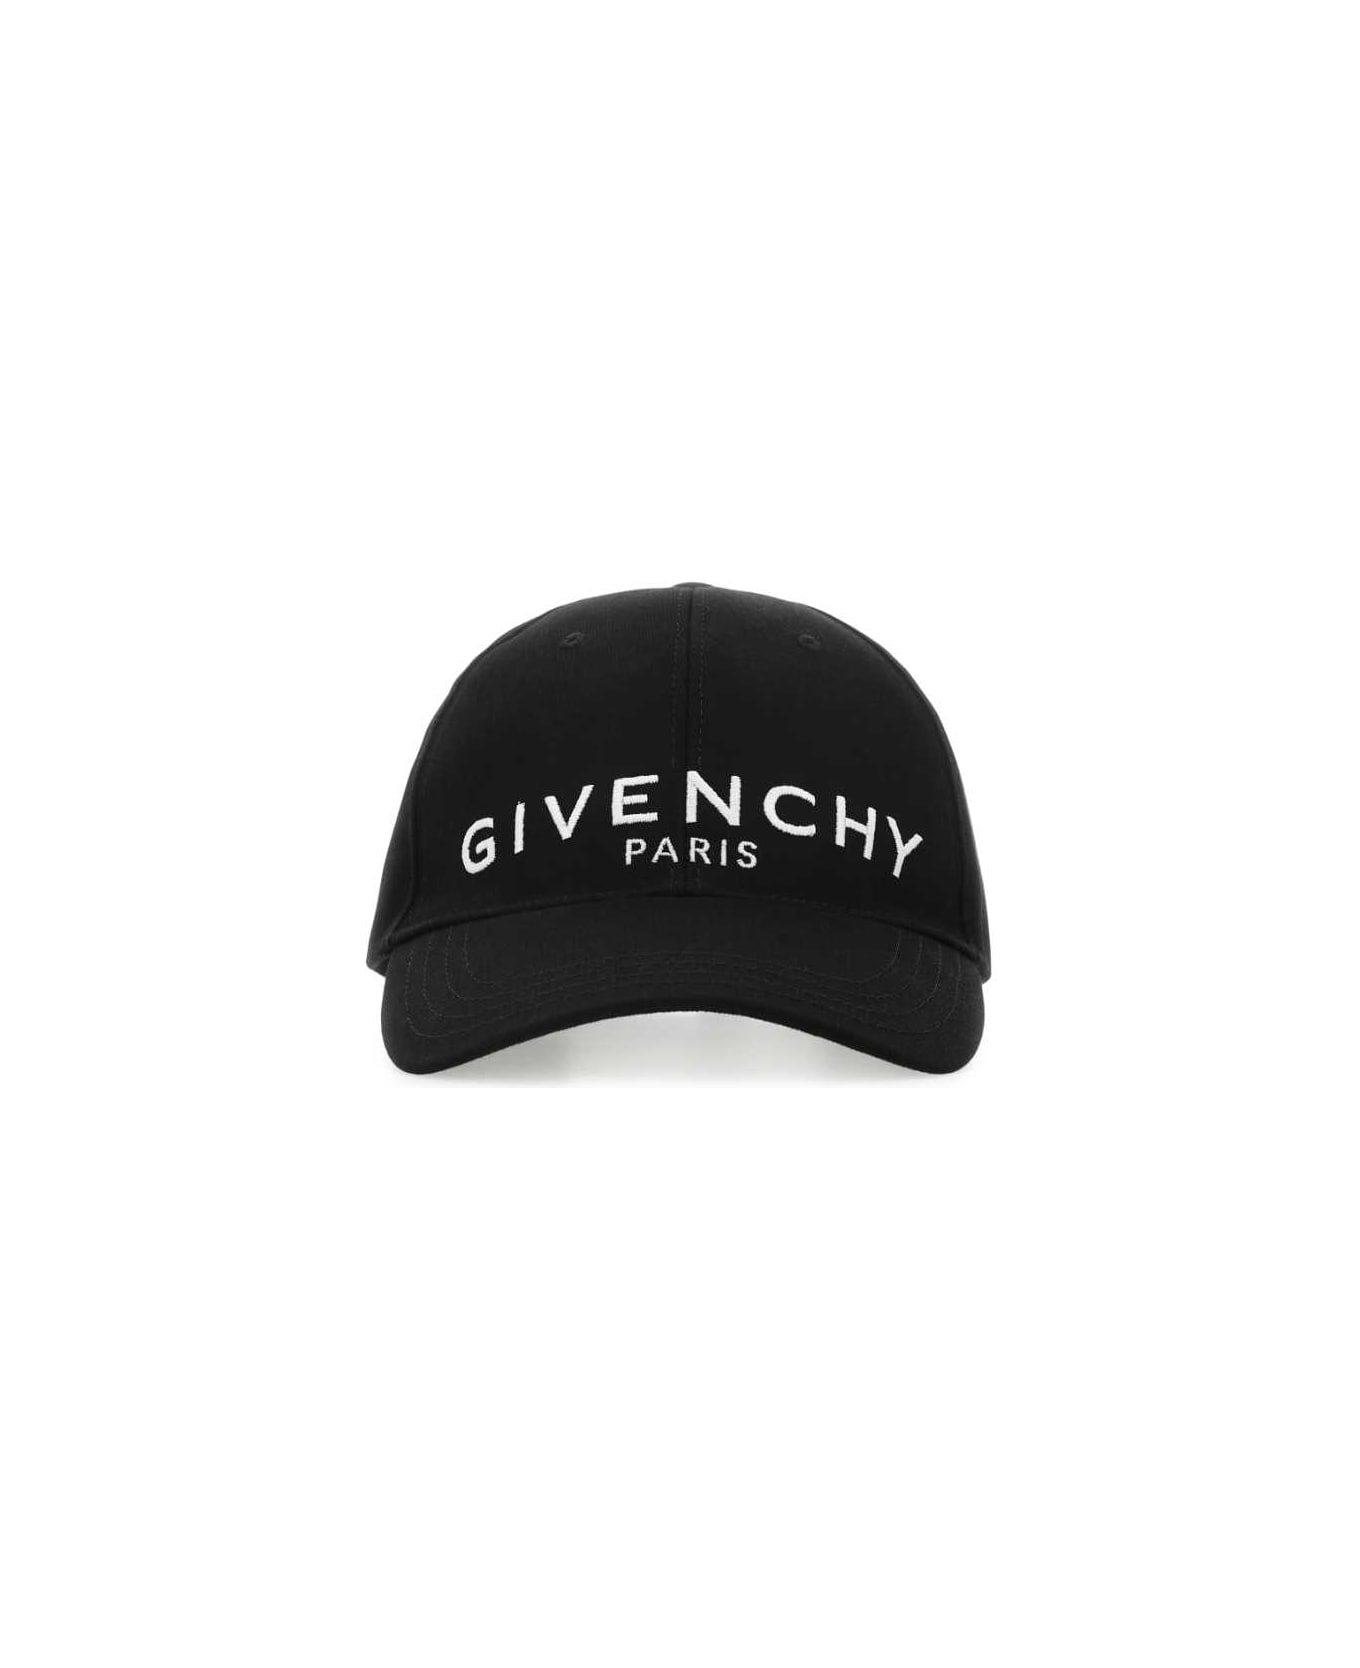 Givenchy Black Cotton Blend Baseball Cap - BLACK